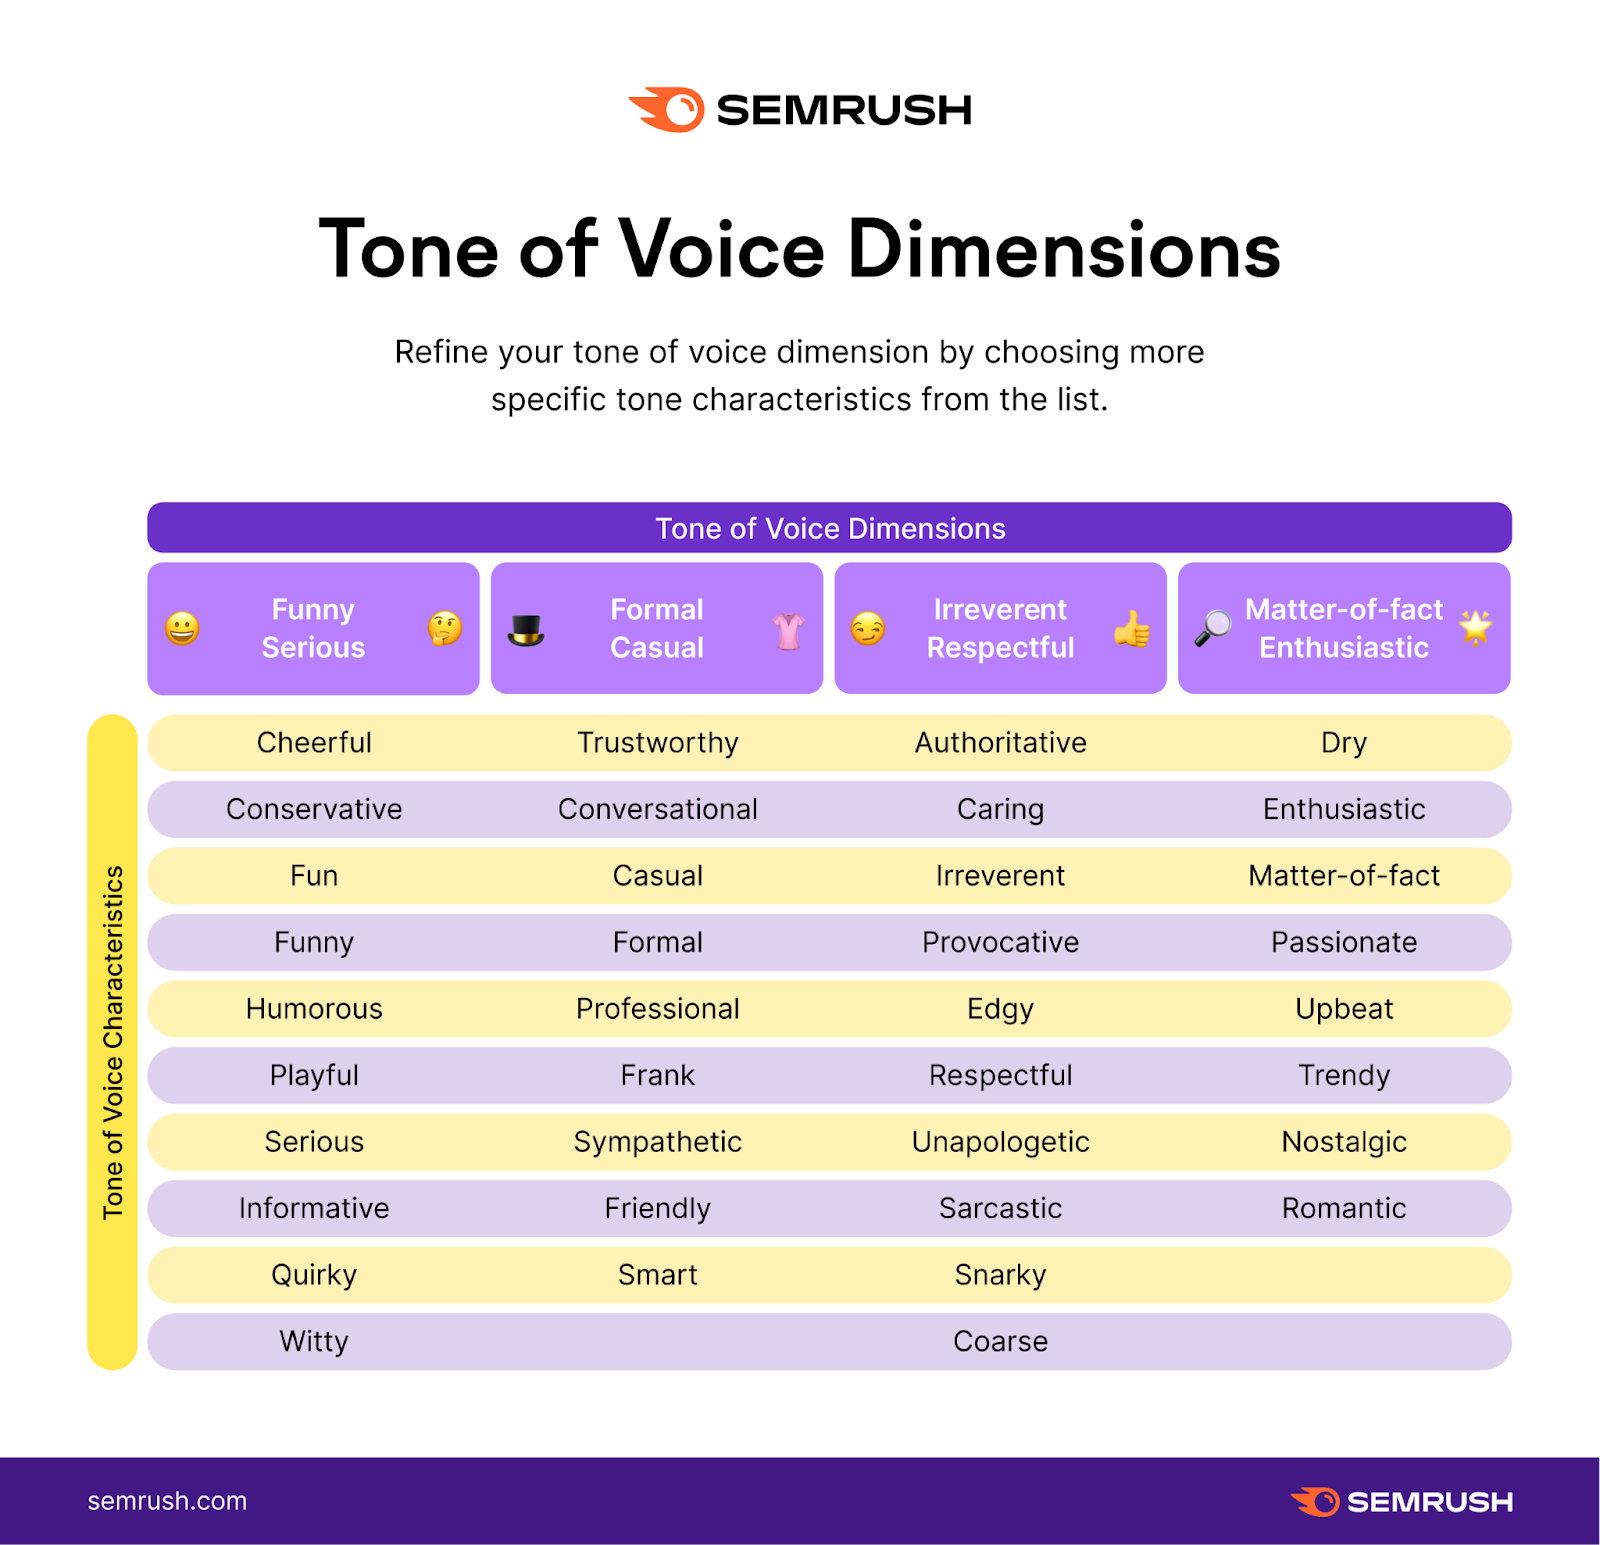 Brand voice dimensions